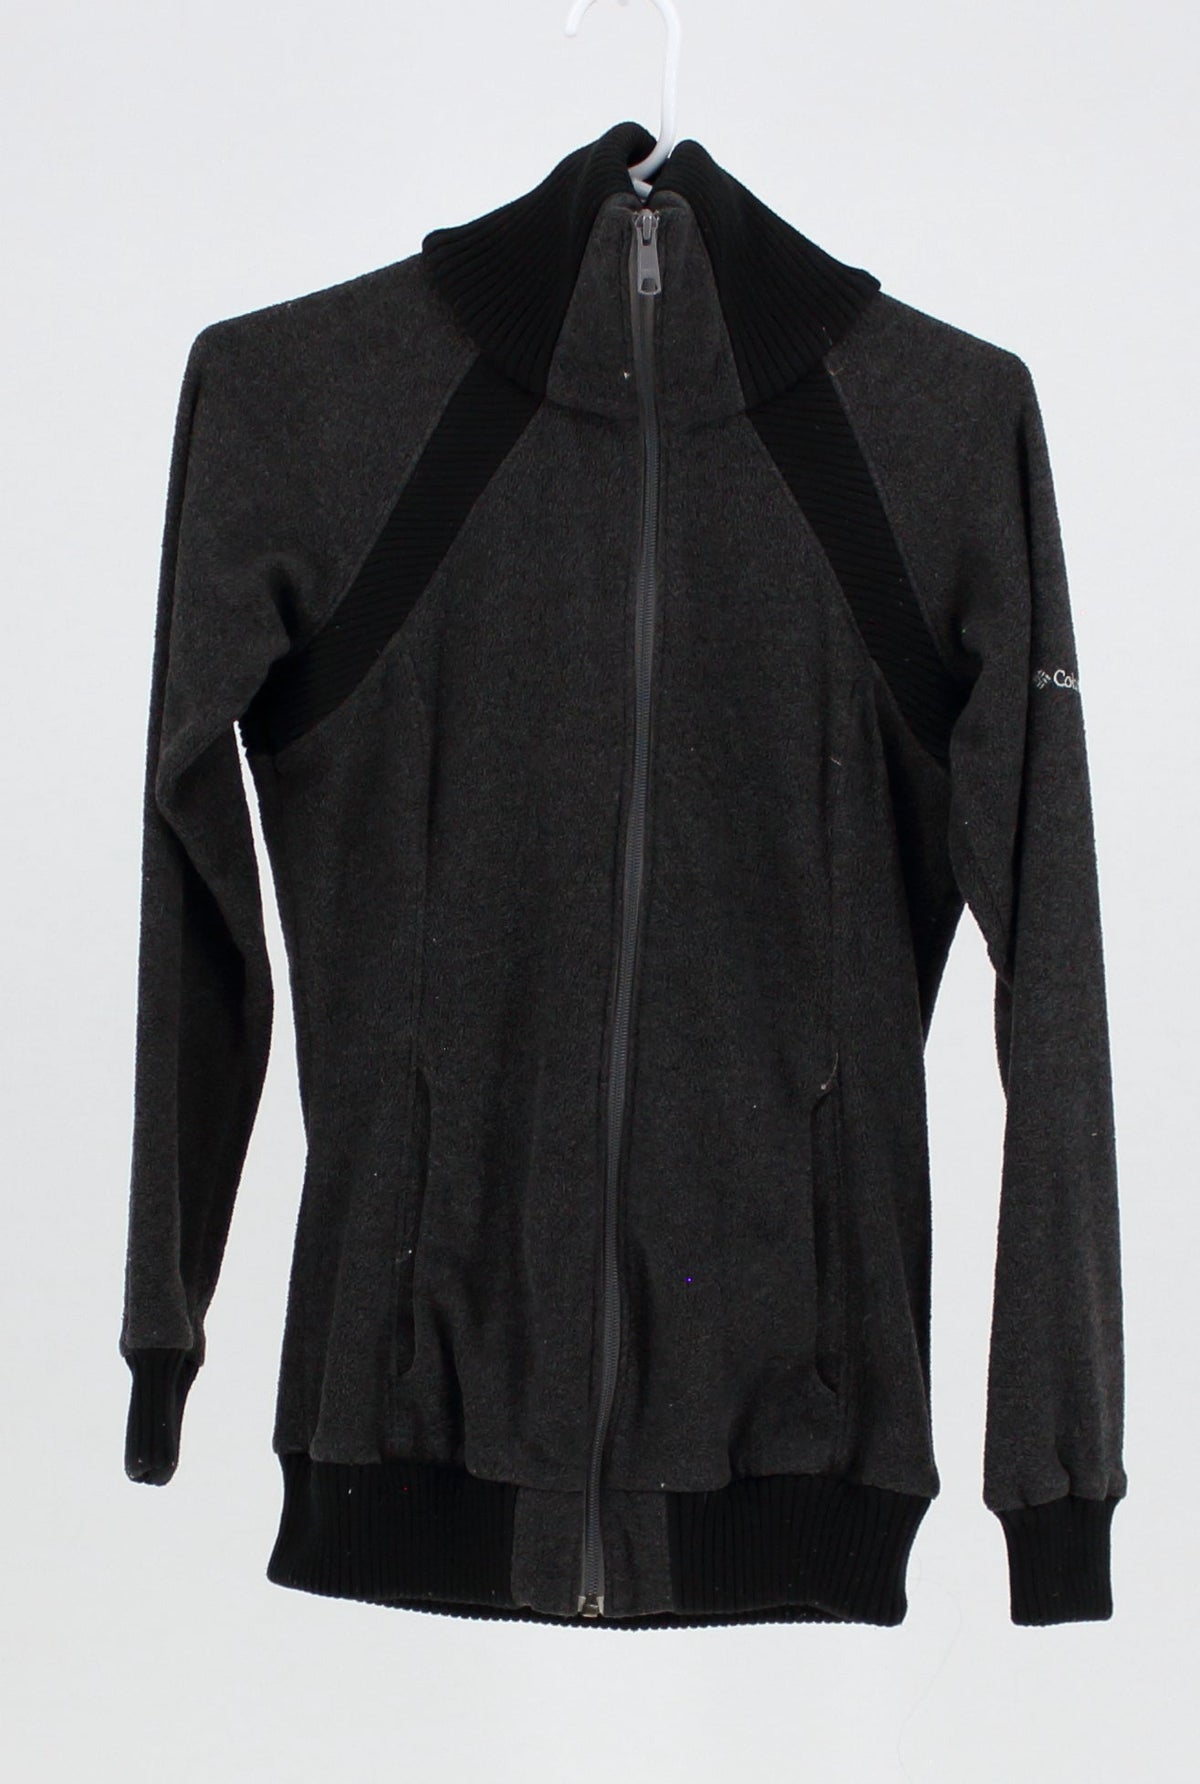 Columbia Grey and Black Turtle-Neck Zip-Up Sweater